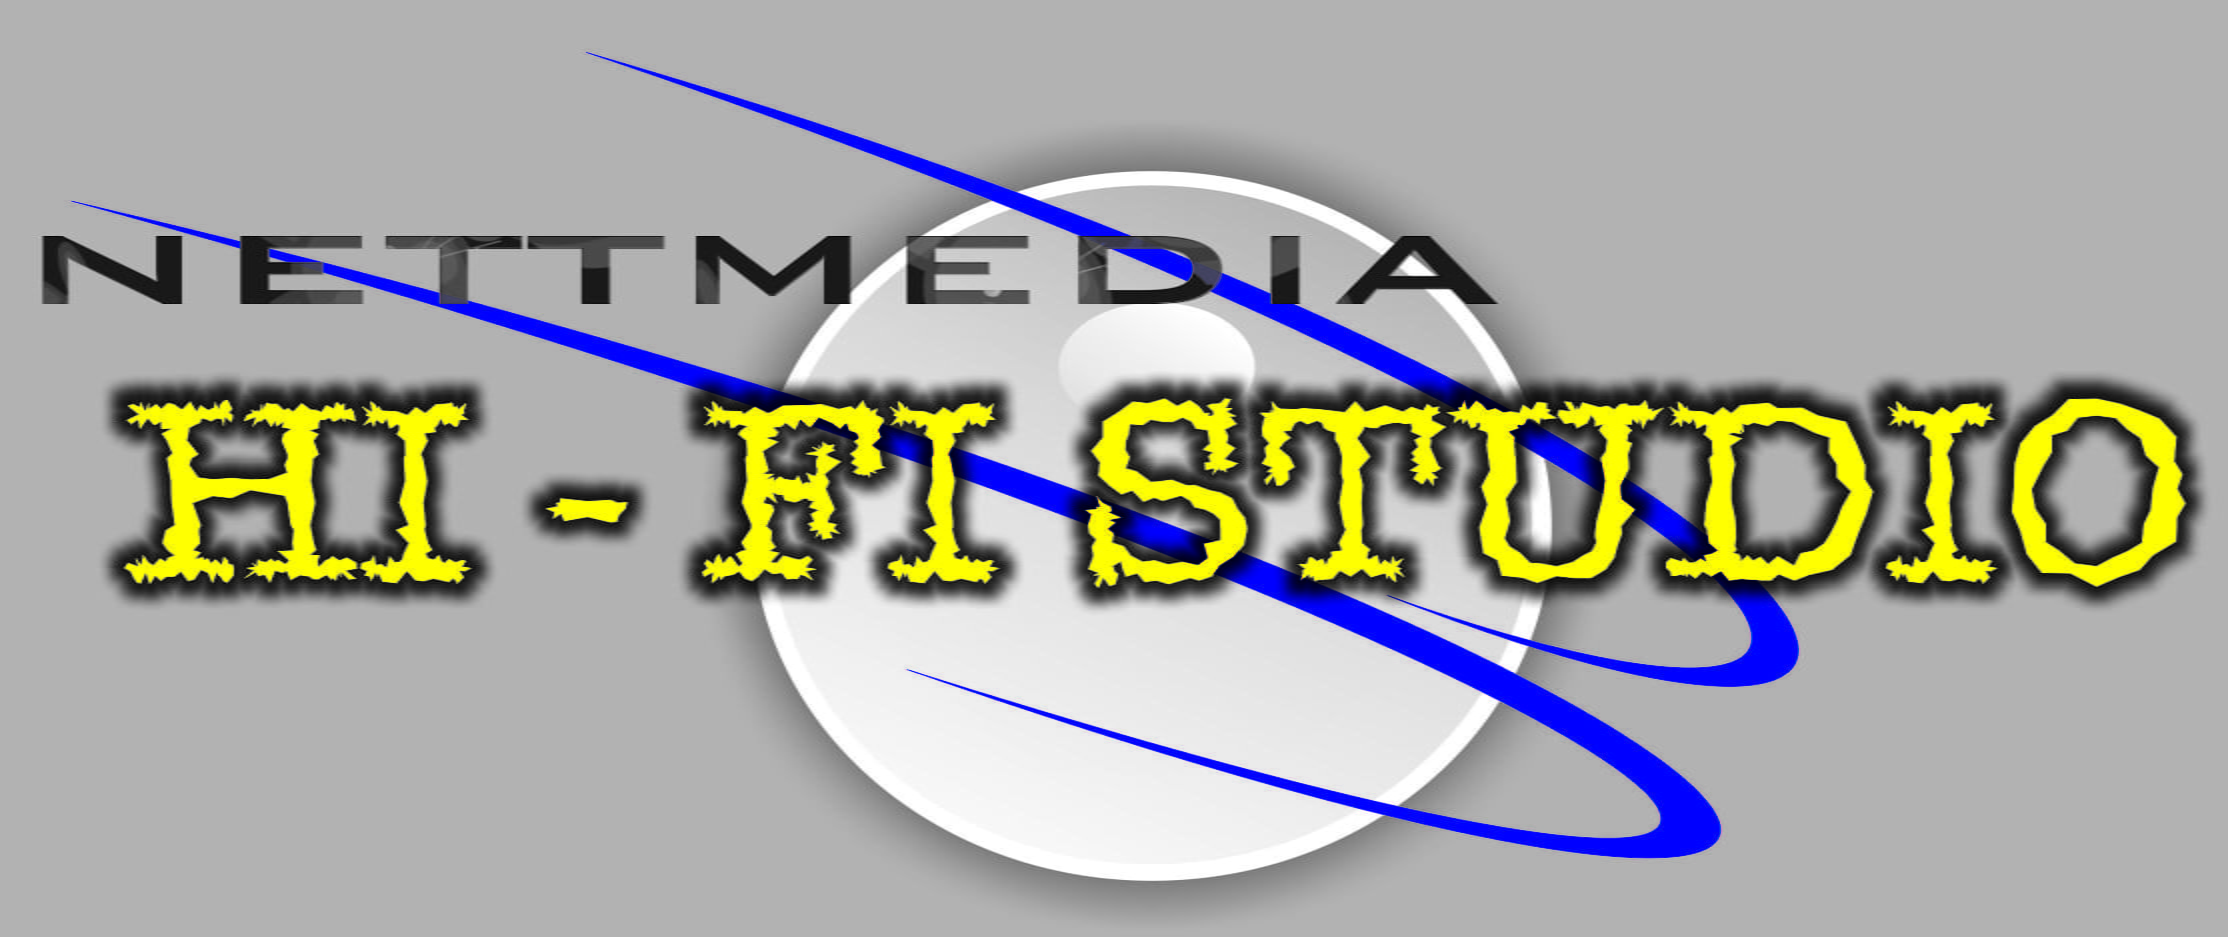 Nettmedia Hi Fi Studio